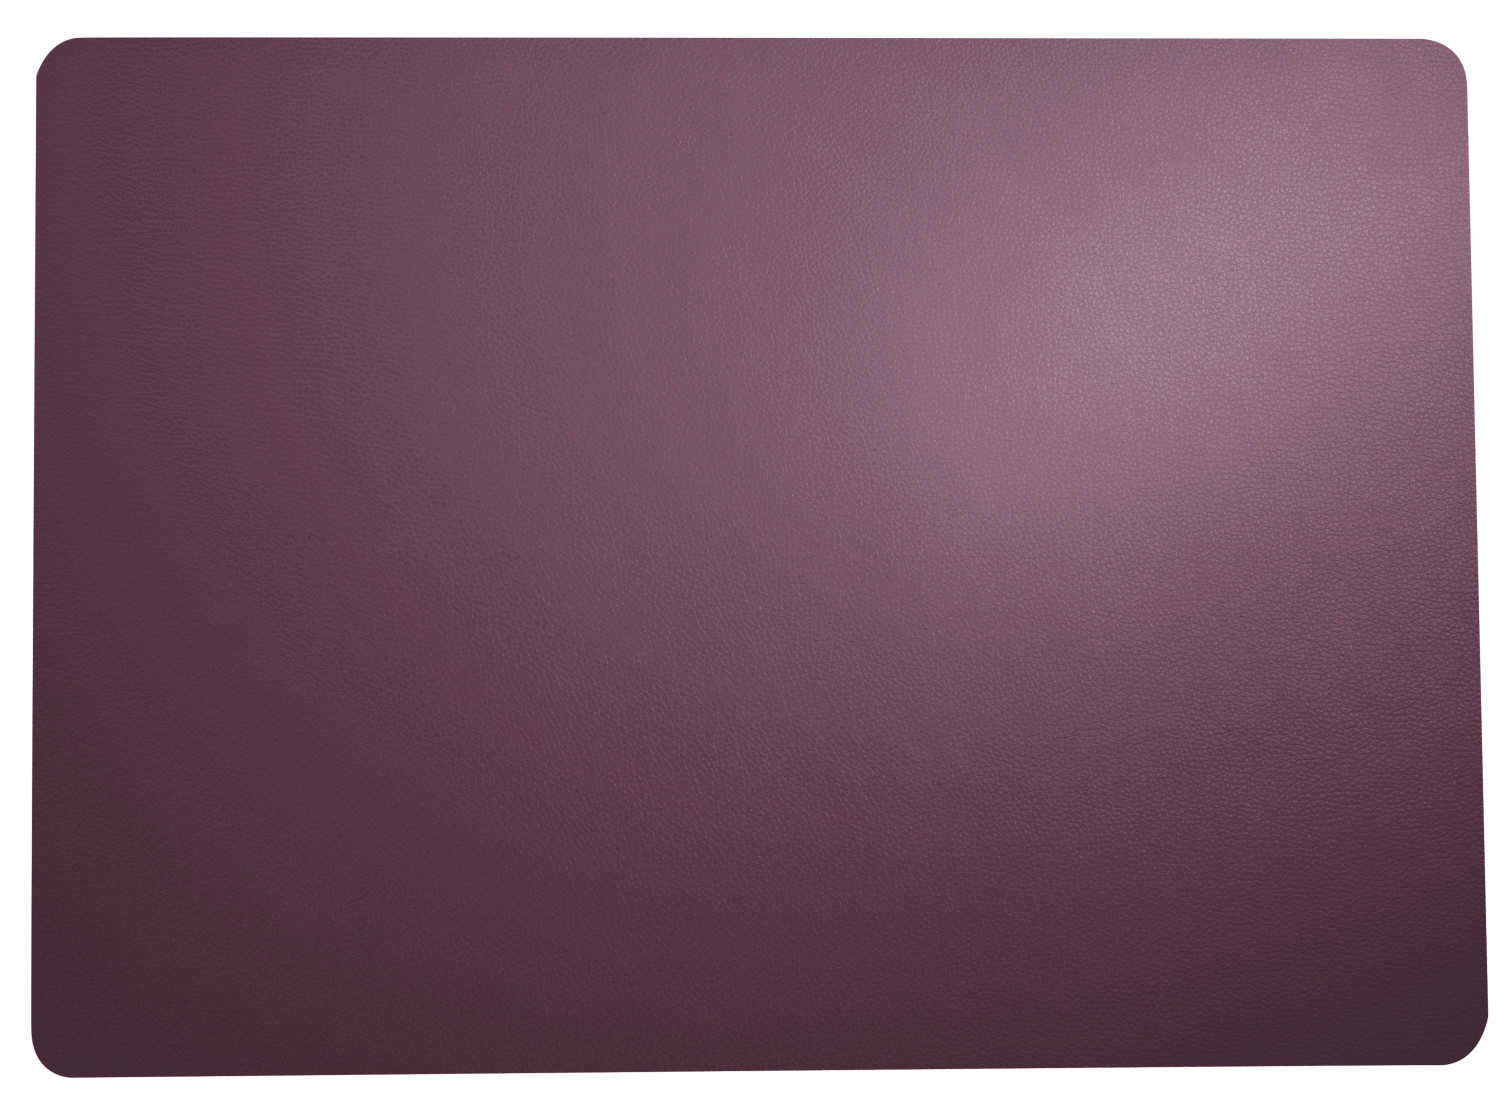  leather optic fine Tischset, plum  Breite: 33cm Länge: 46cm  